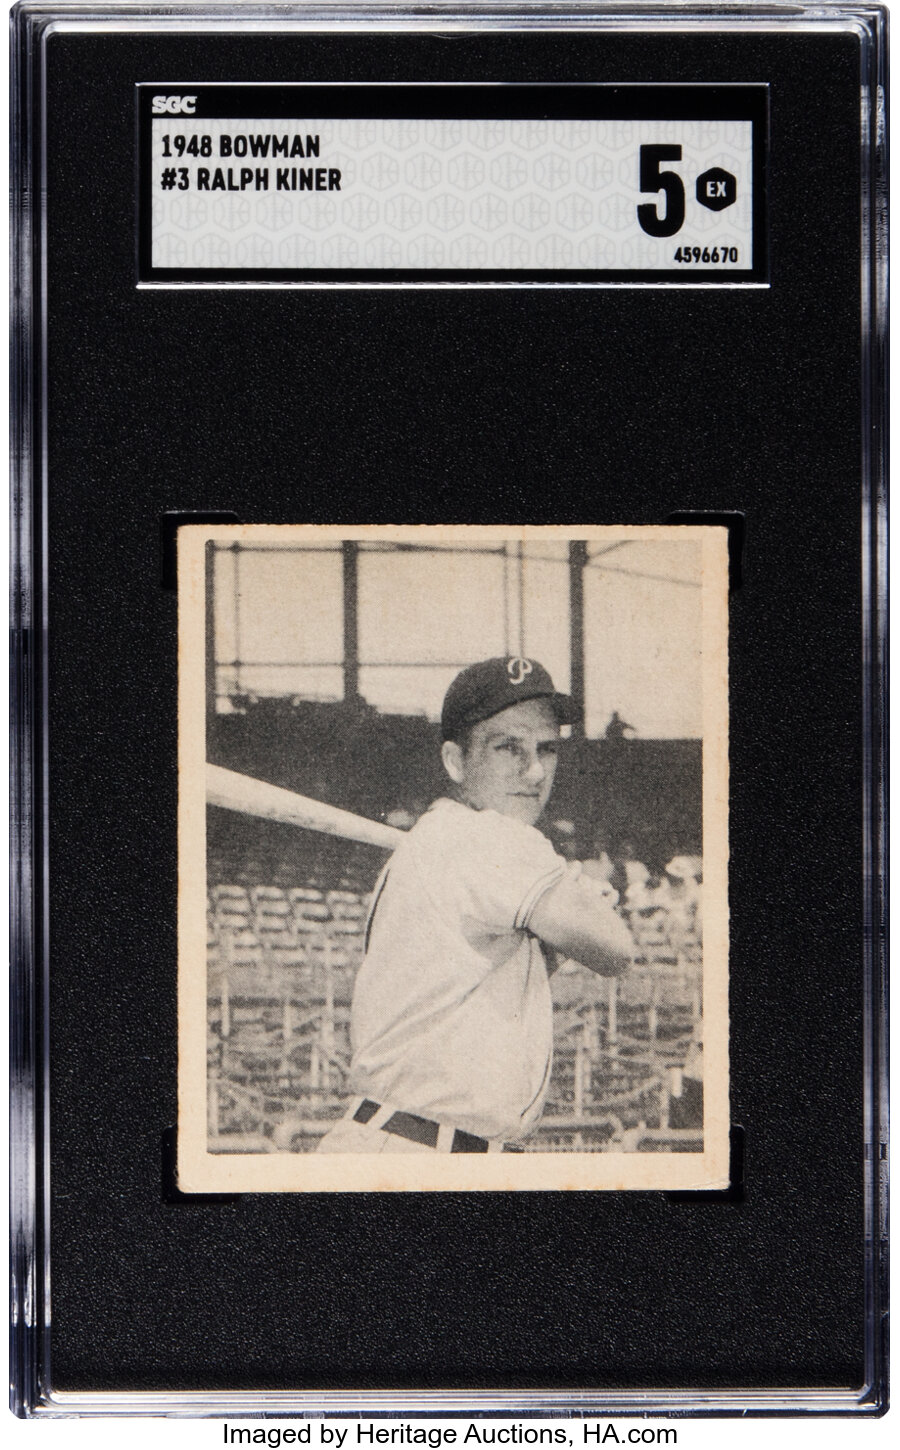 1948 Bowman Ralph Kiner #3 SGC EX 5